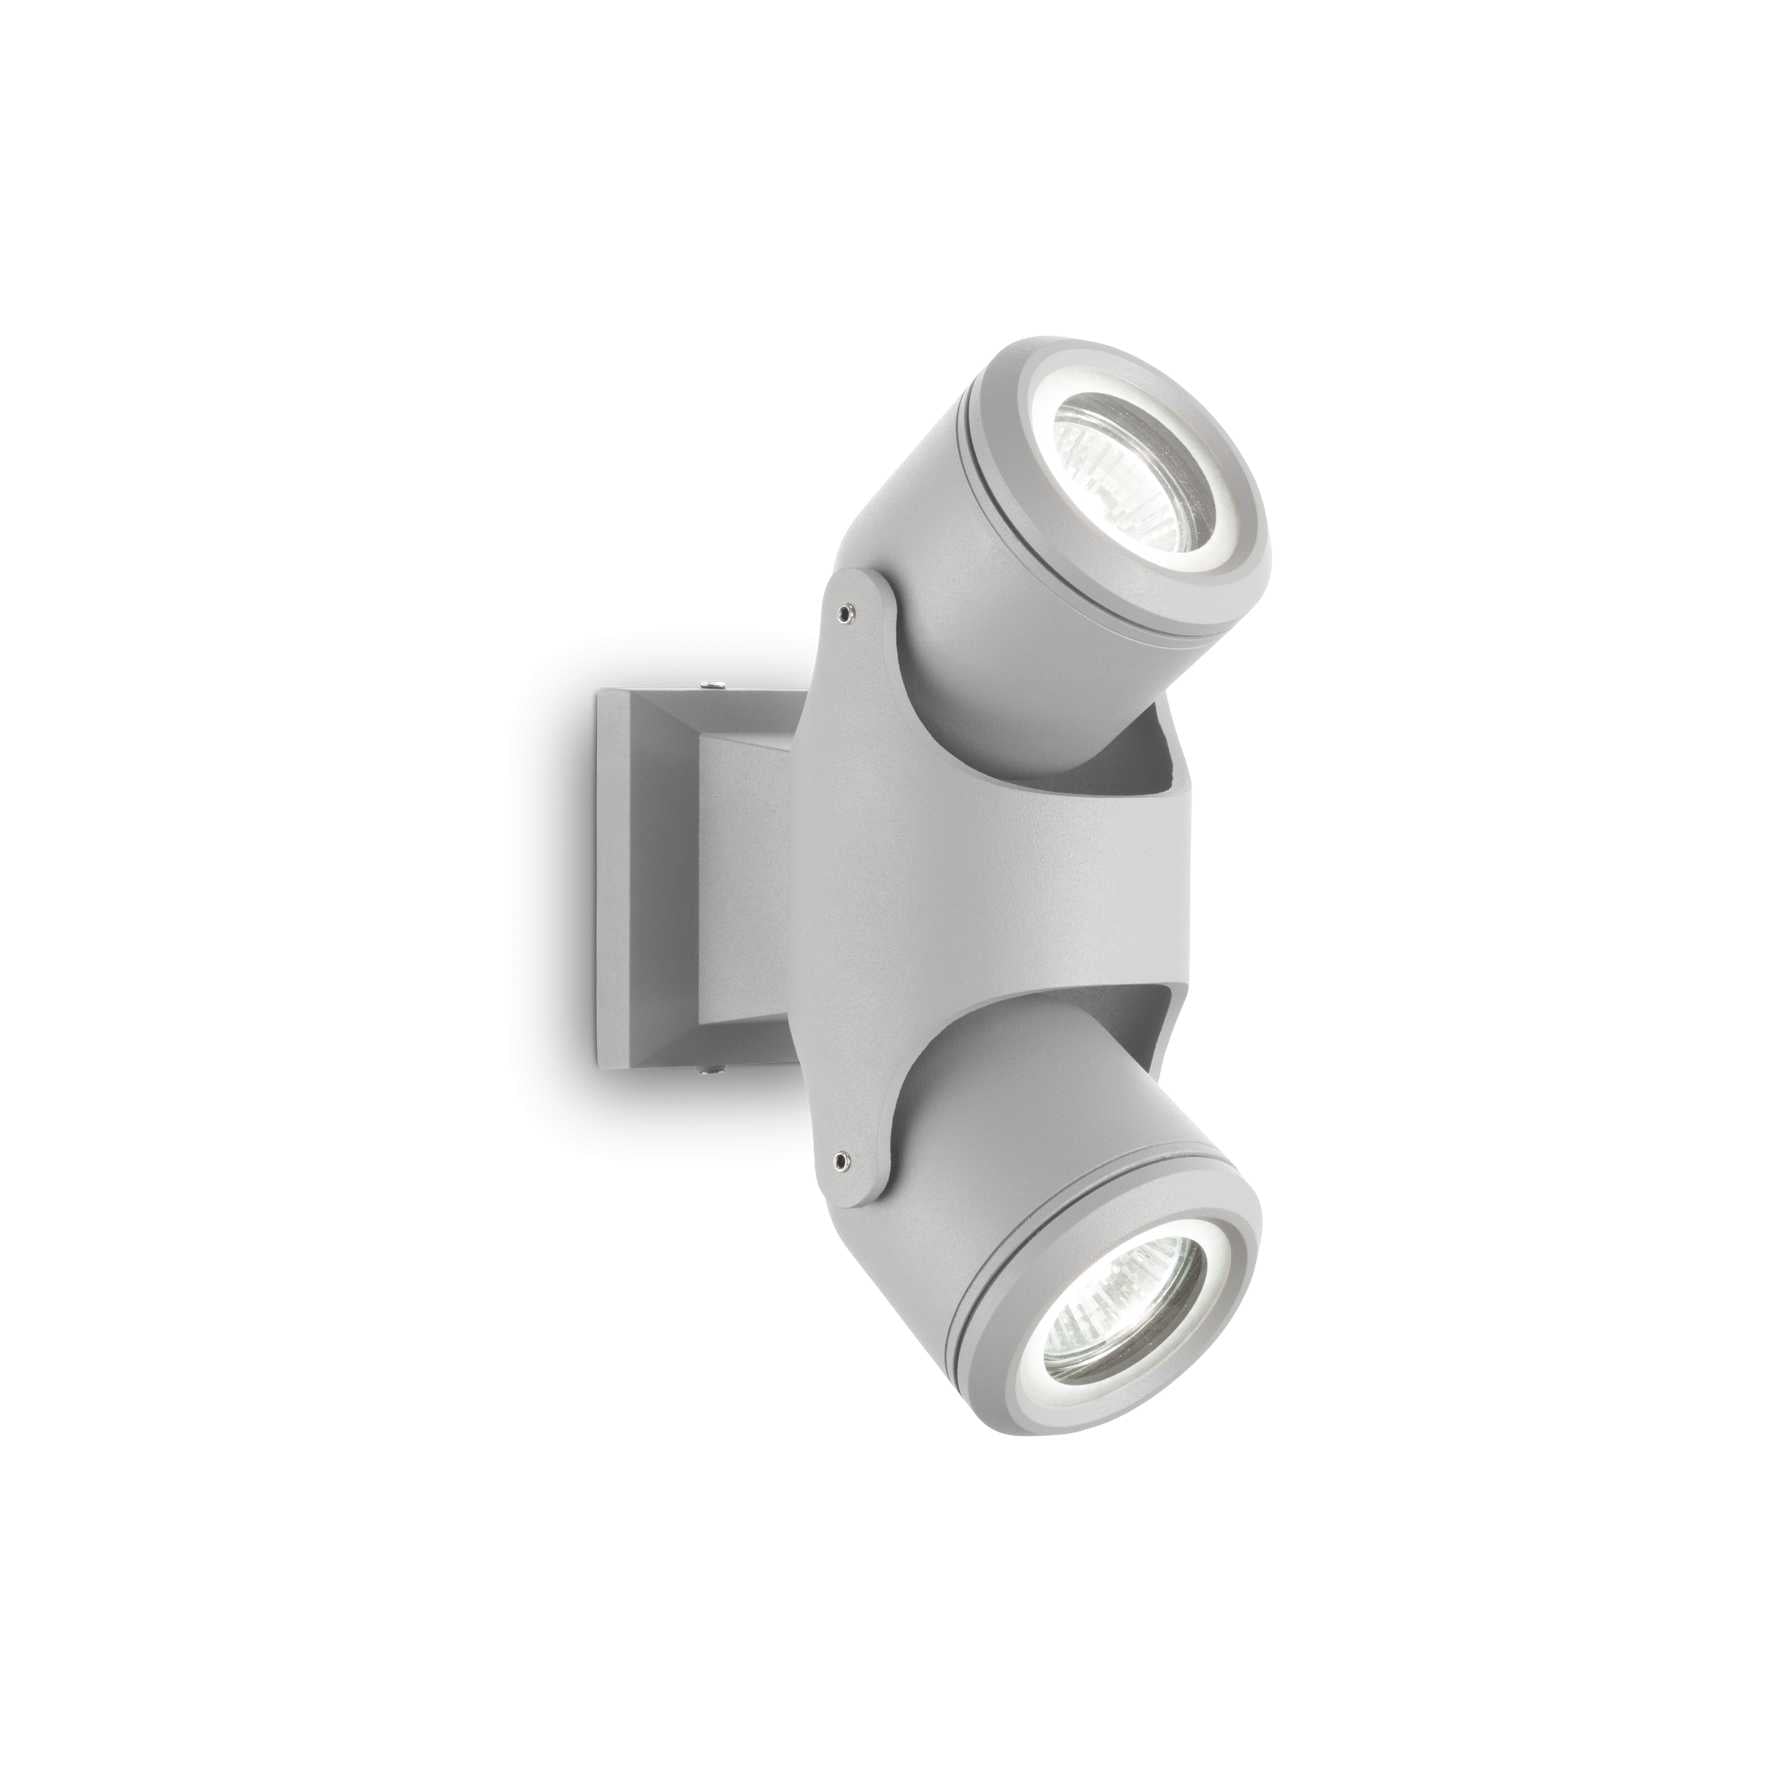 Xeno Wall Light Fitting - Black/White/Grey Finish - Cusack Lighting